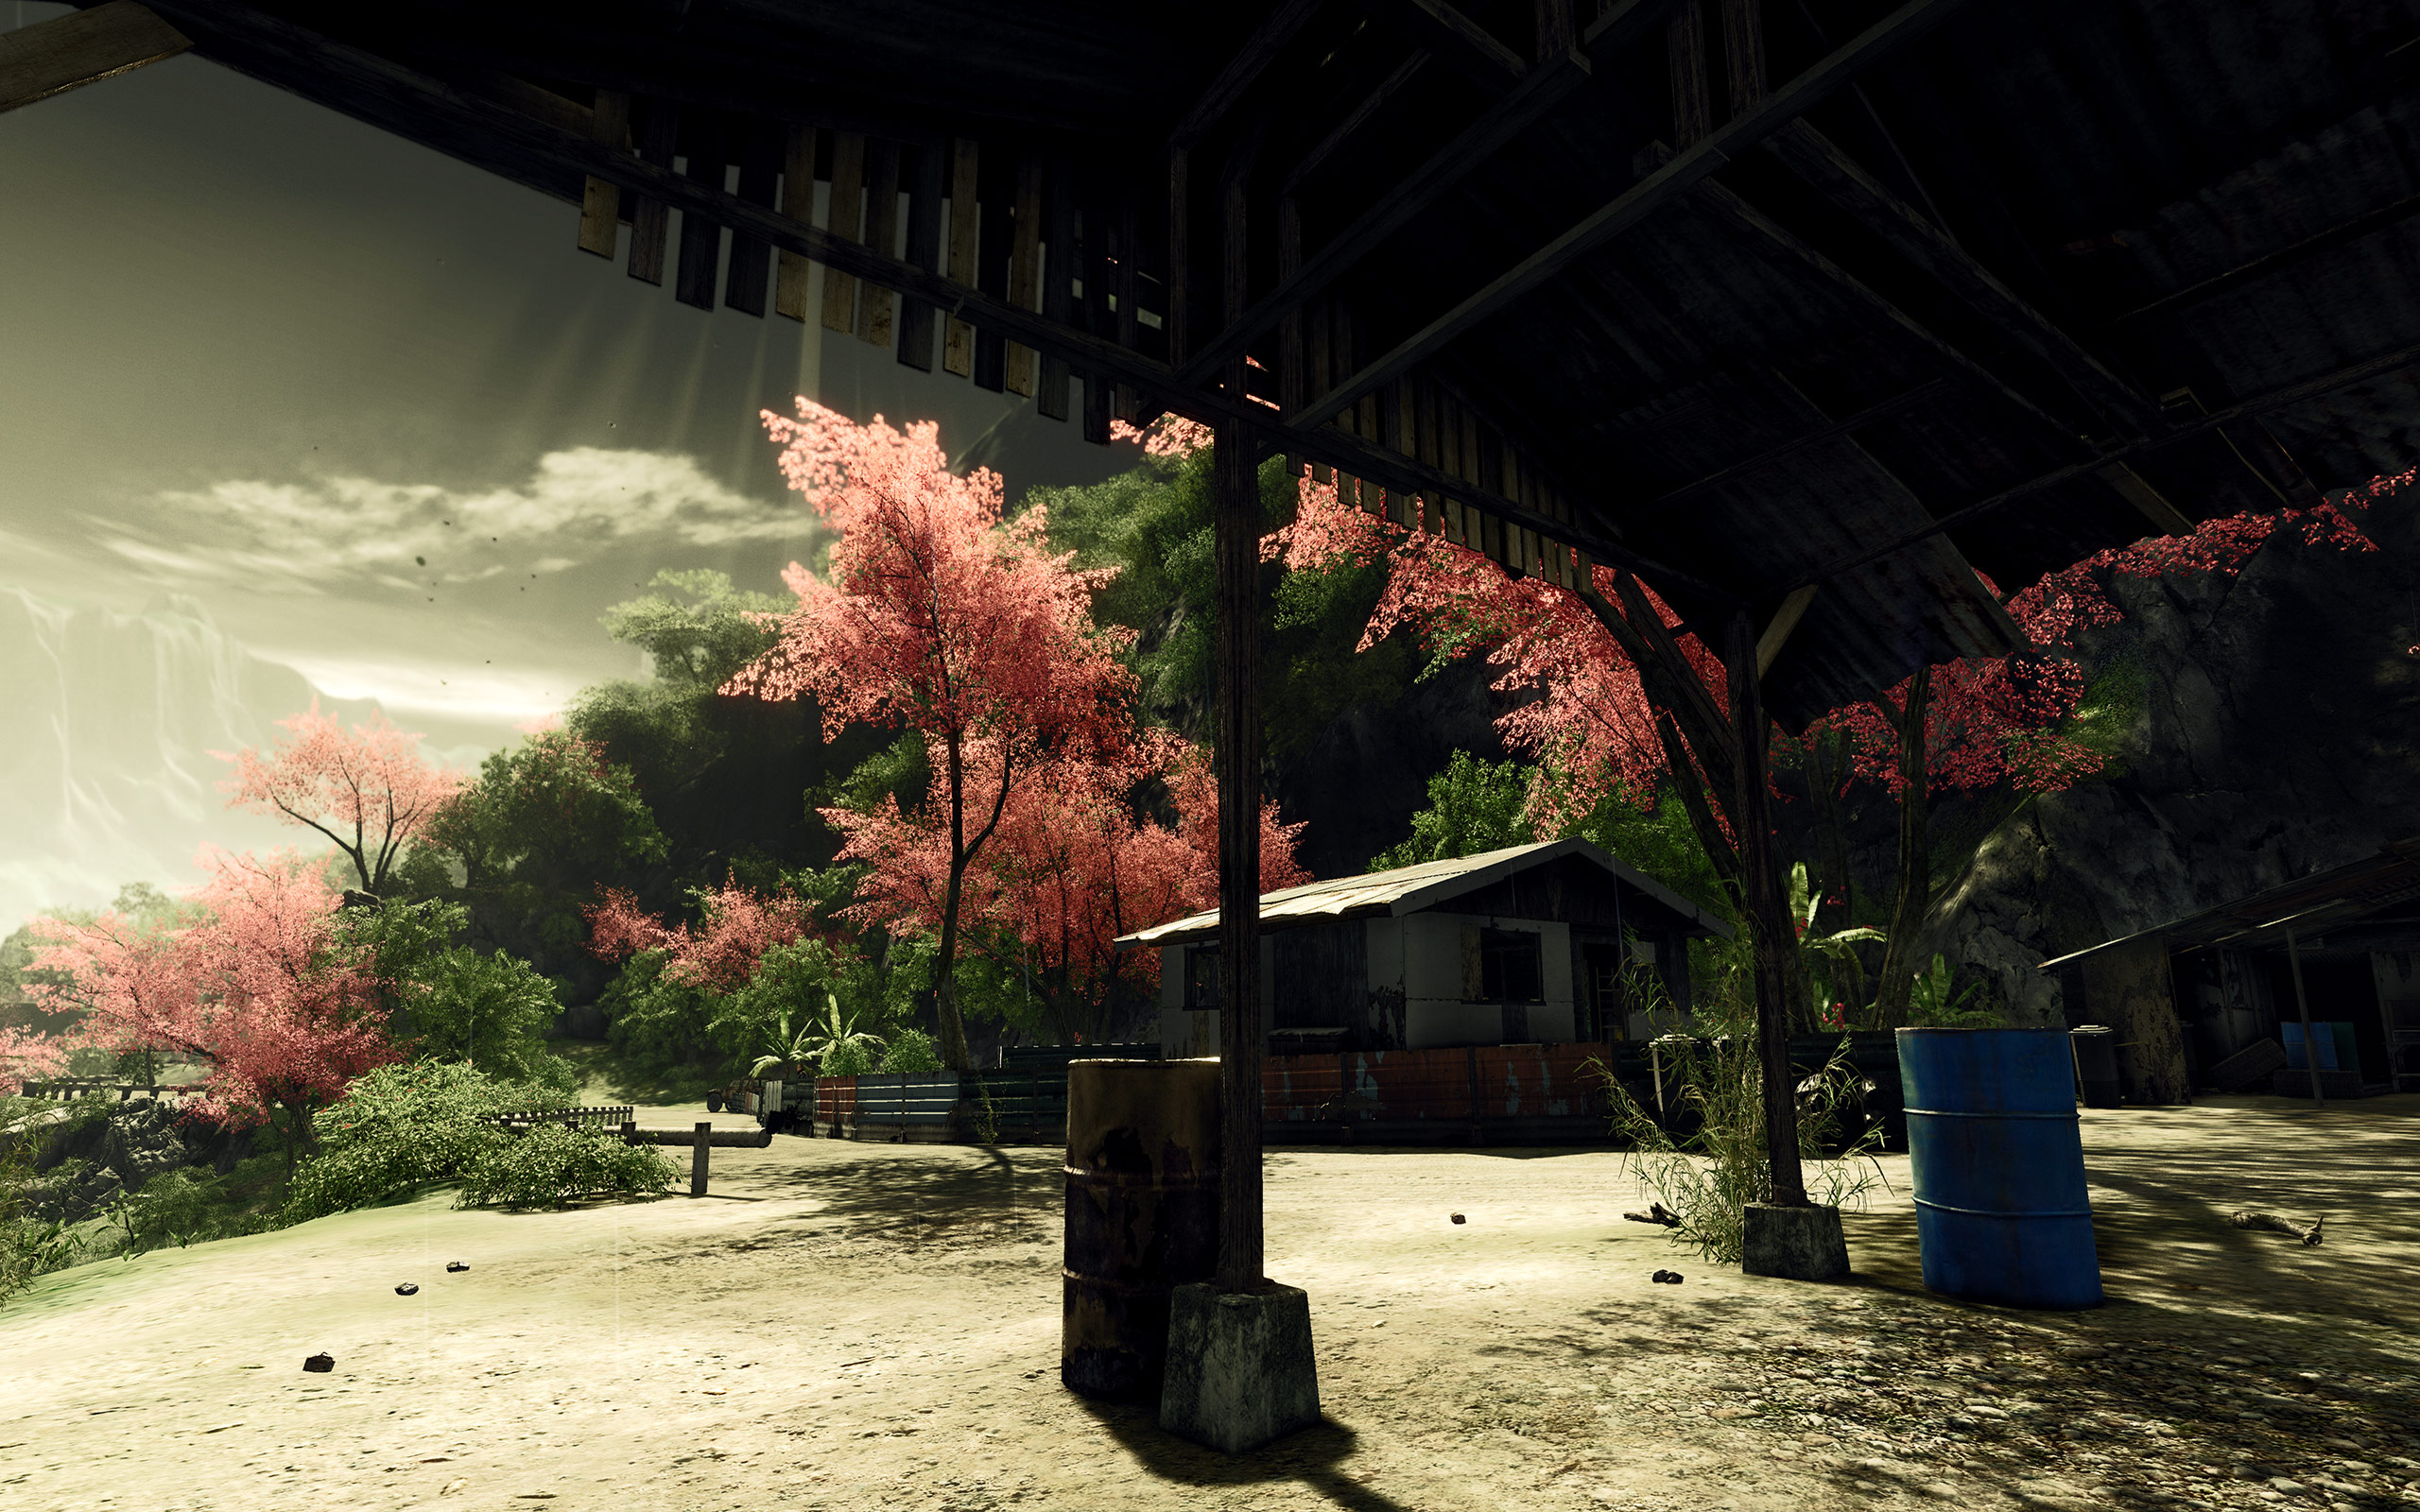 Stunning CGI artwork of a house nestled among trees.